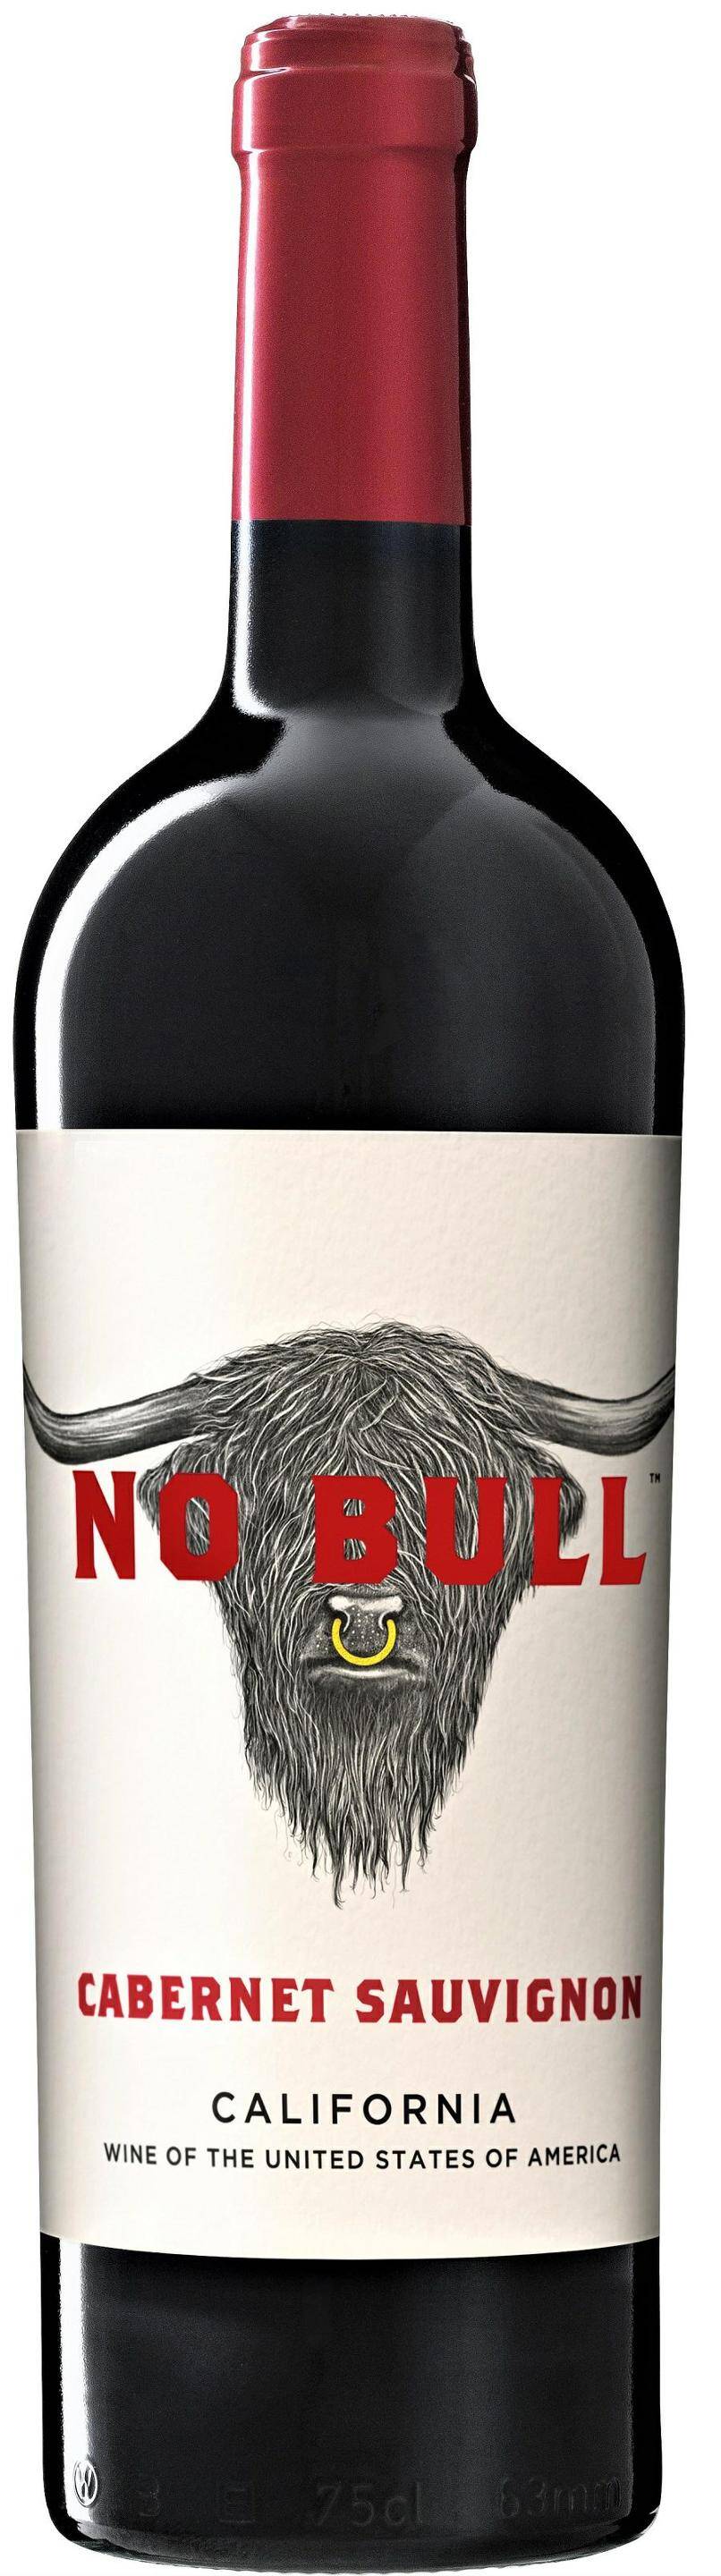 No Bull Cabernet Sauvignon CW USA (Photo 1)